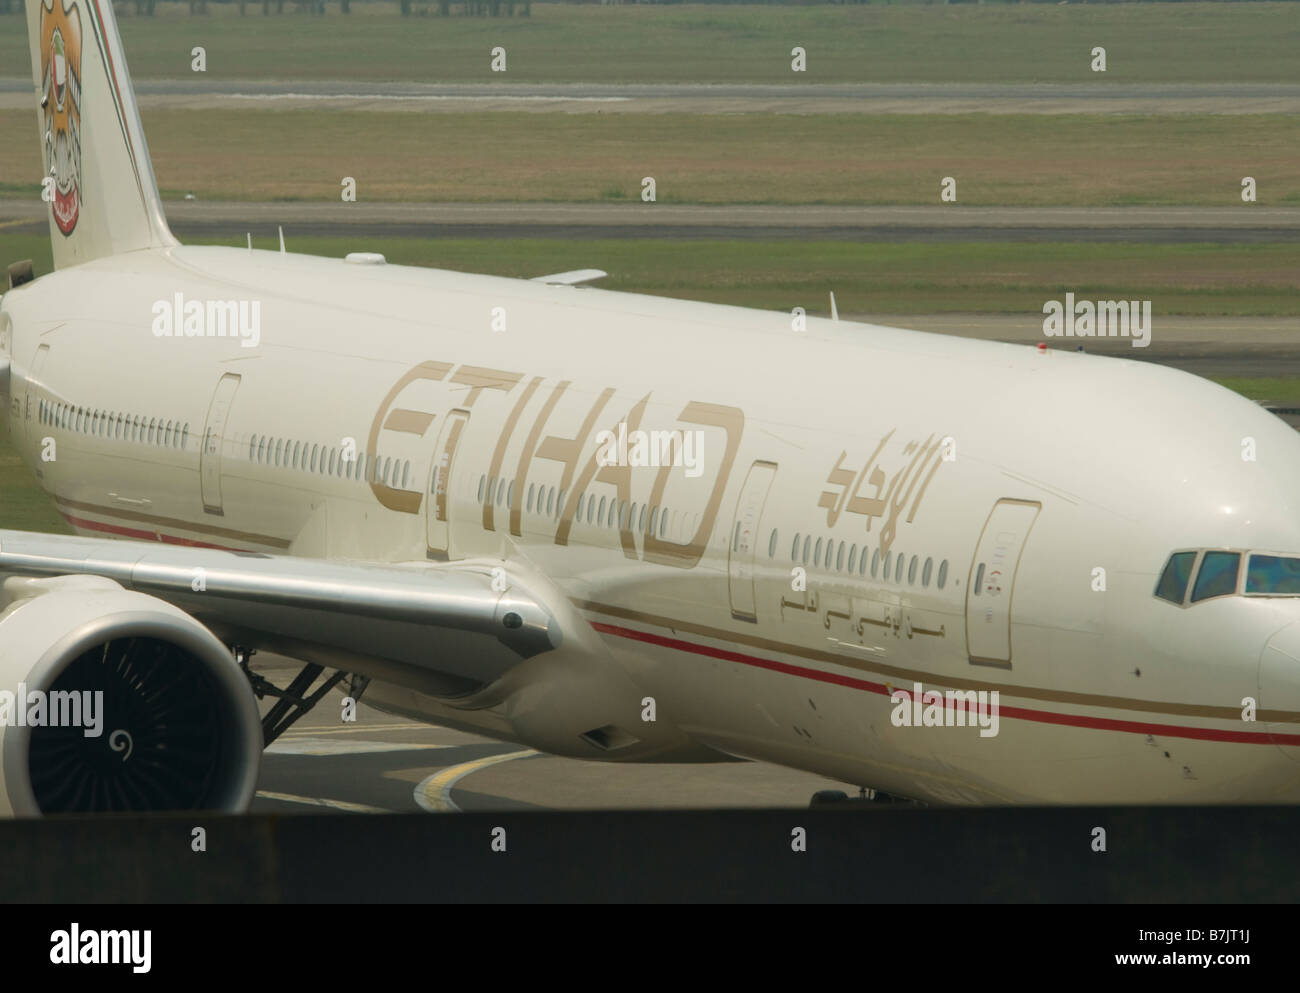 Etihad airline plane on the runway at Jakarta airport Indonesia Stock Photo